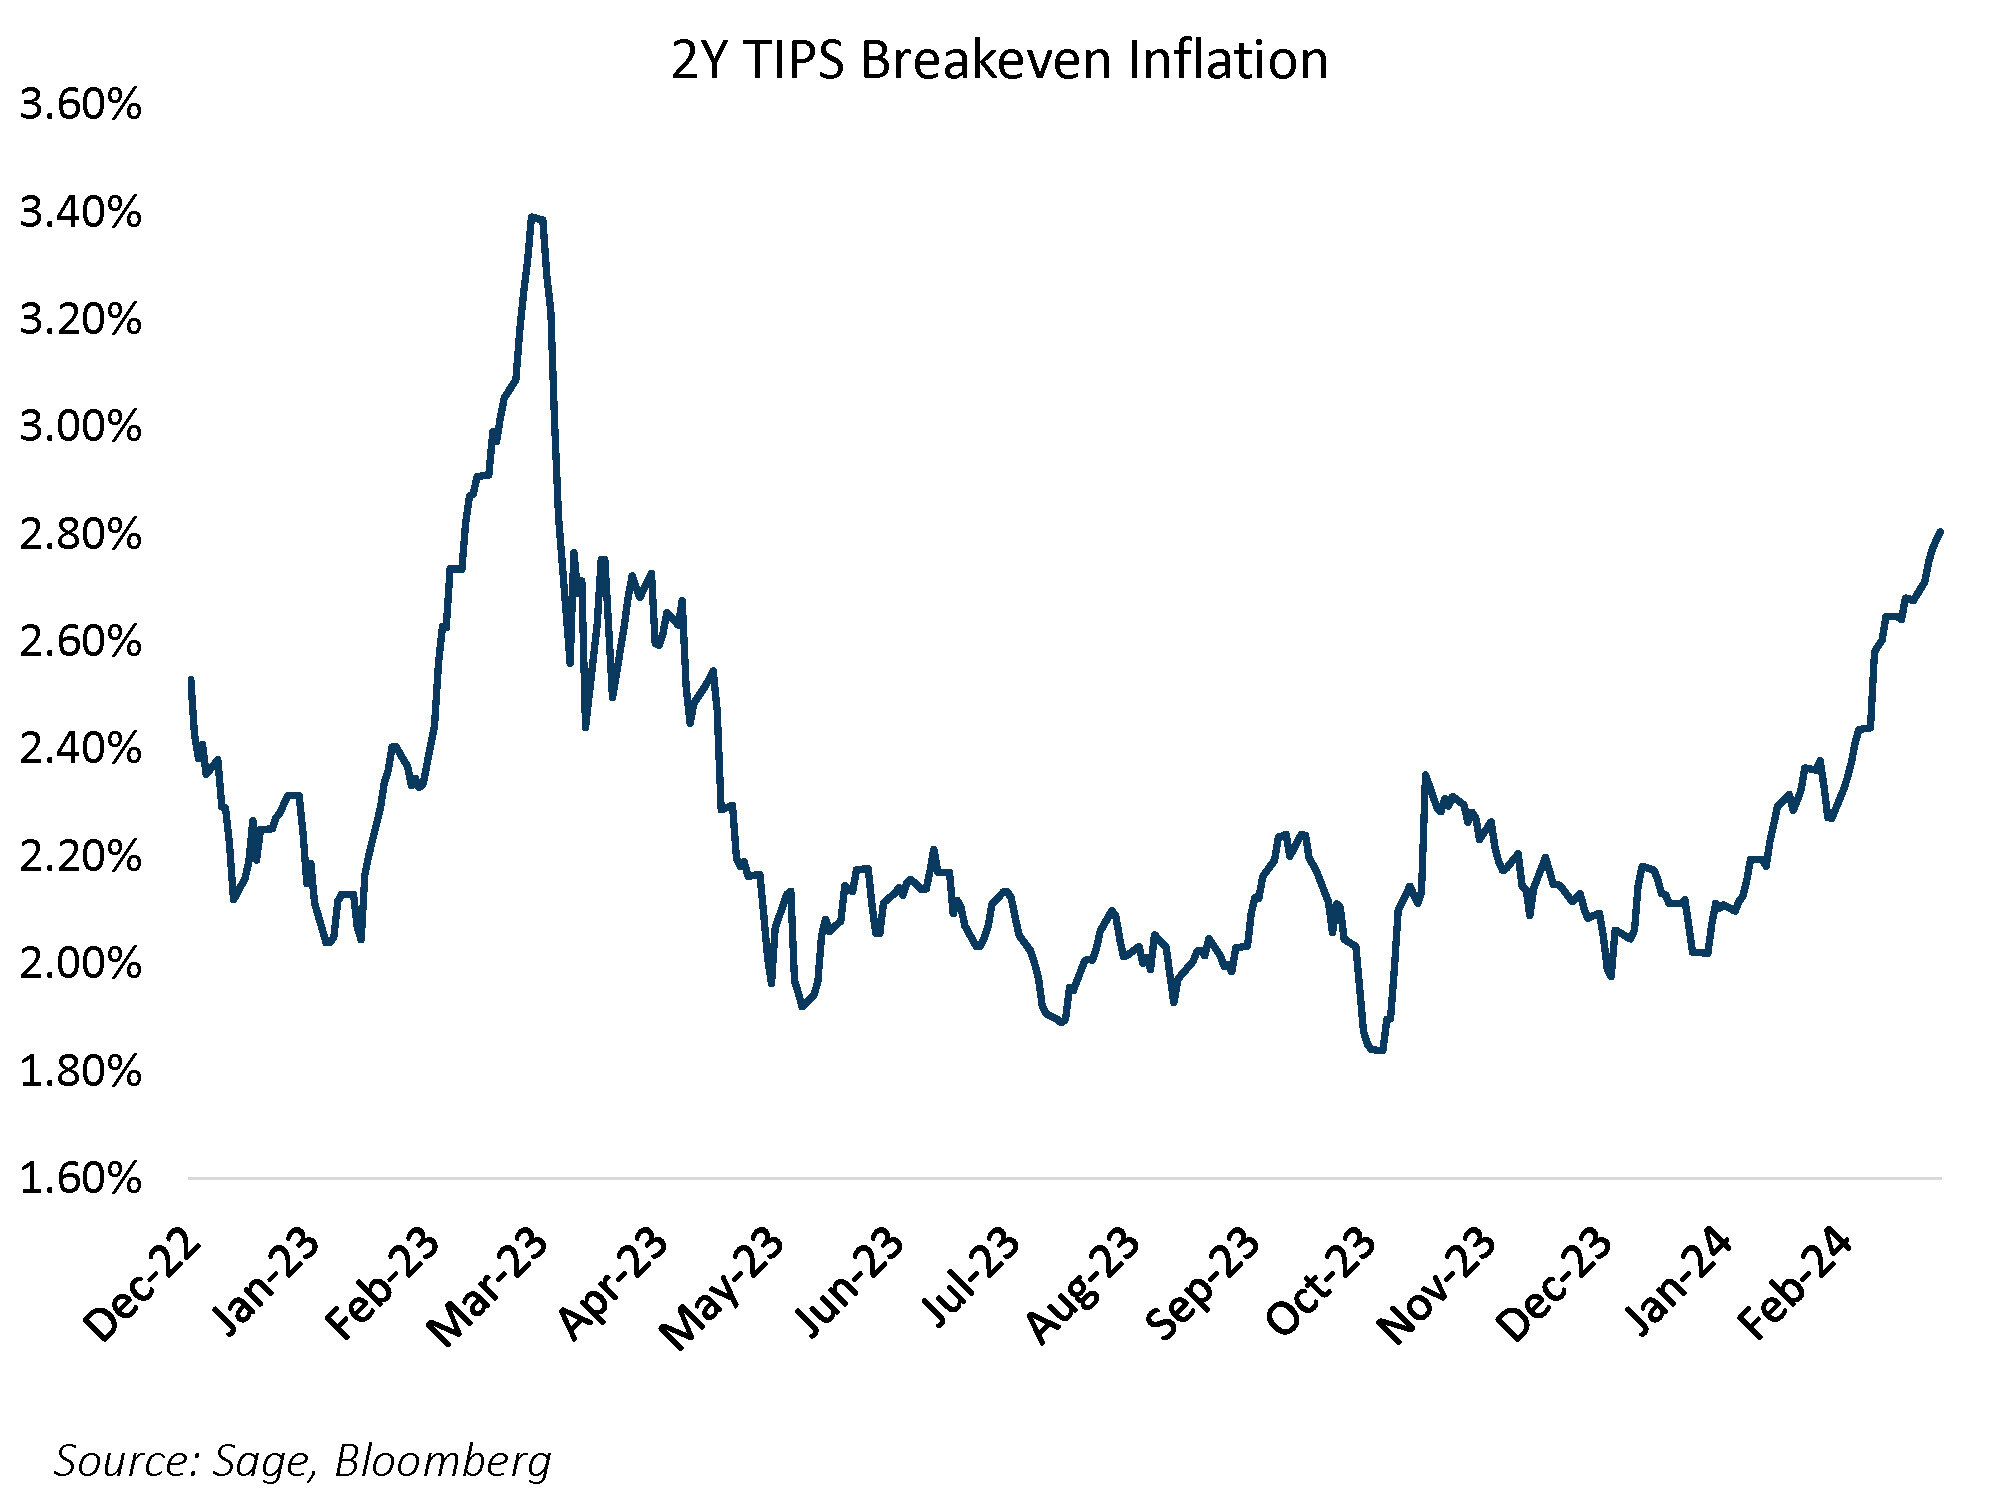 2Y Tips Breakeven Inflation